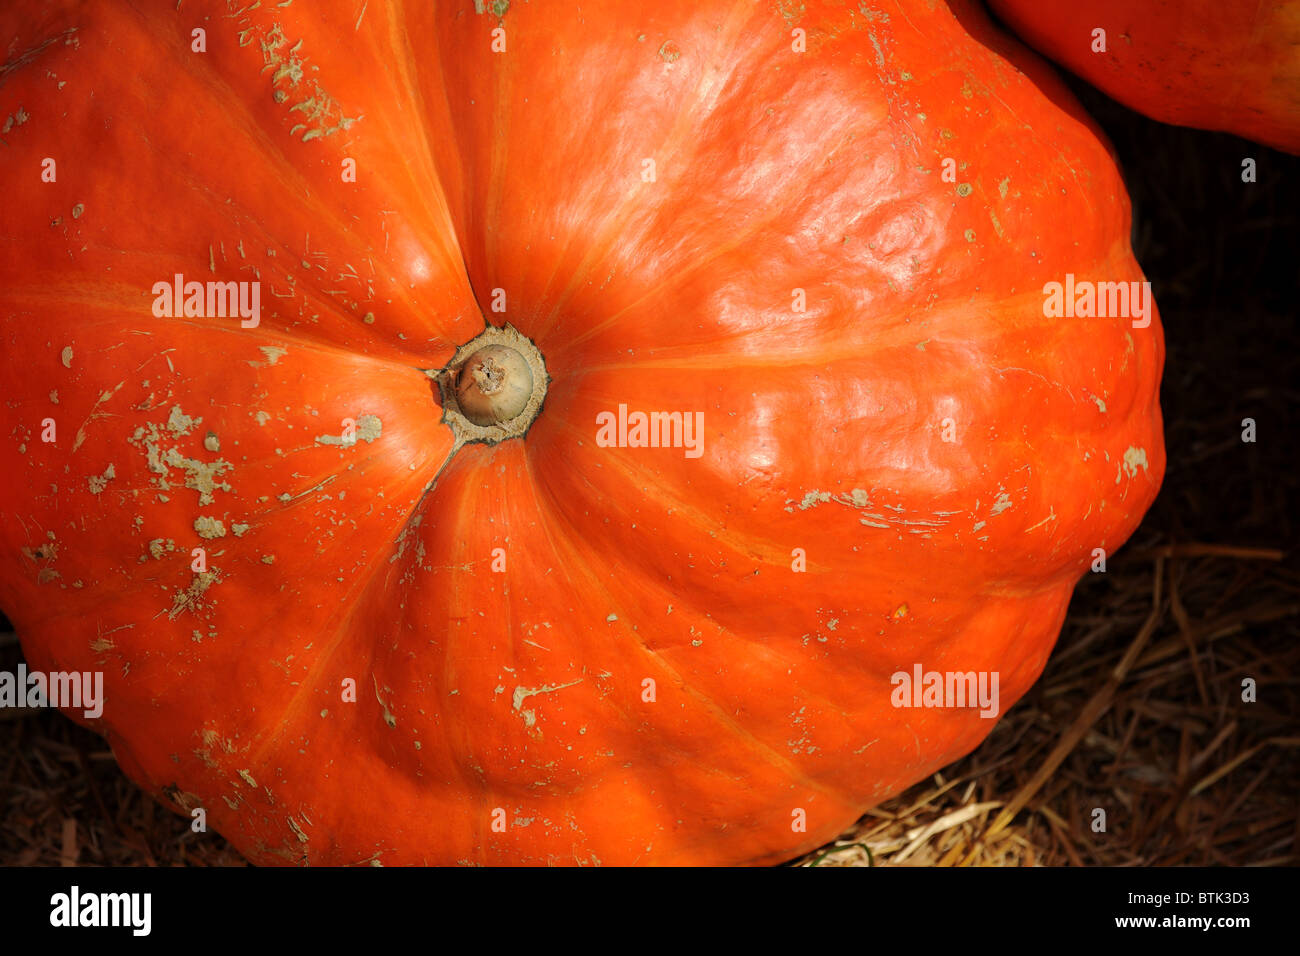 Close up view of large orange pumpkin Stock Photo